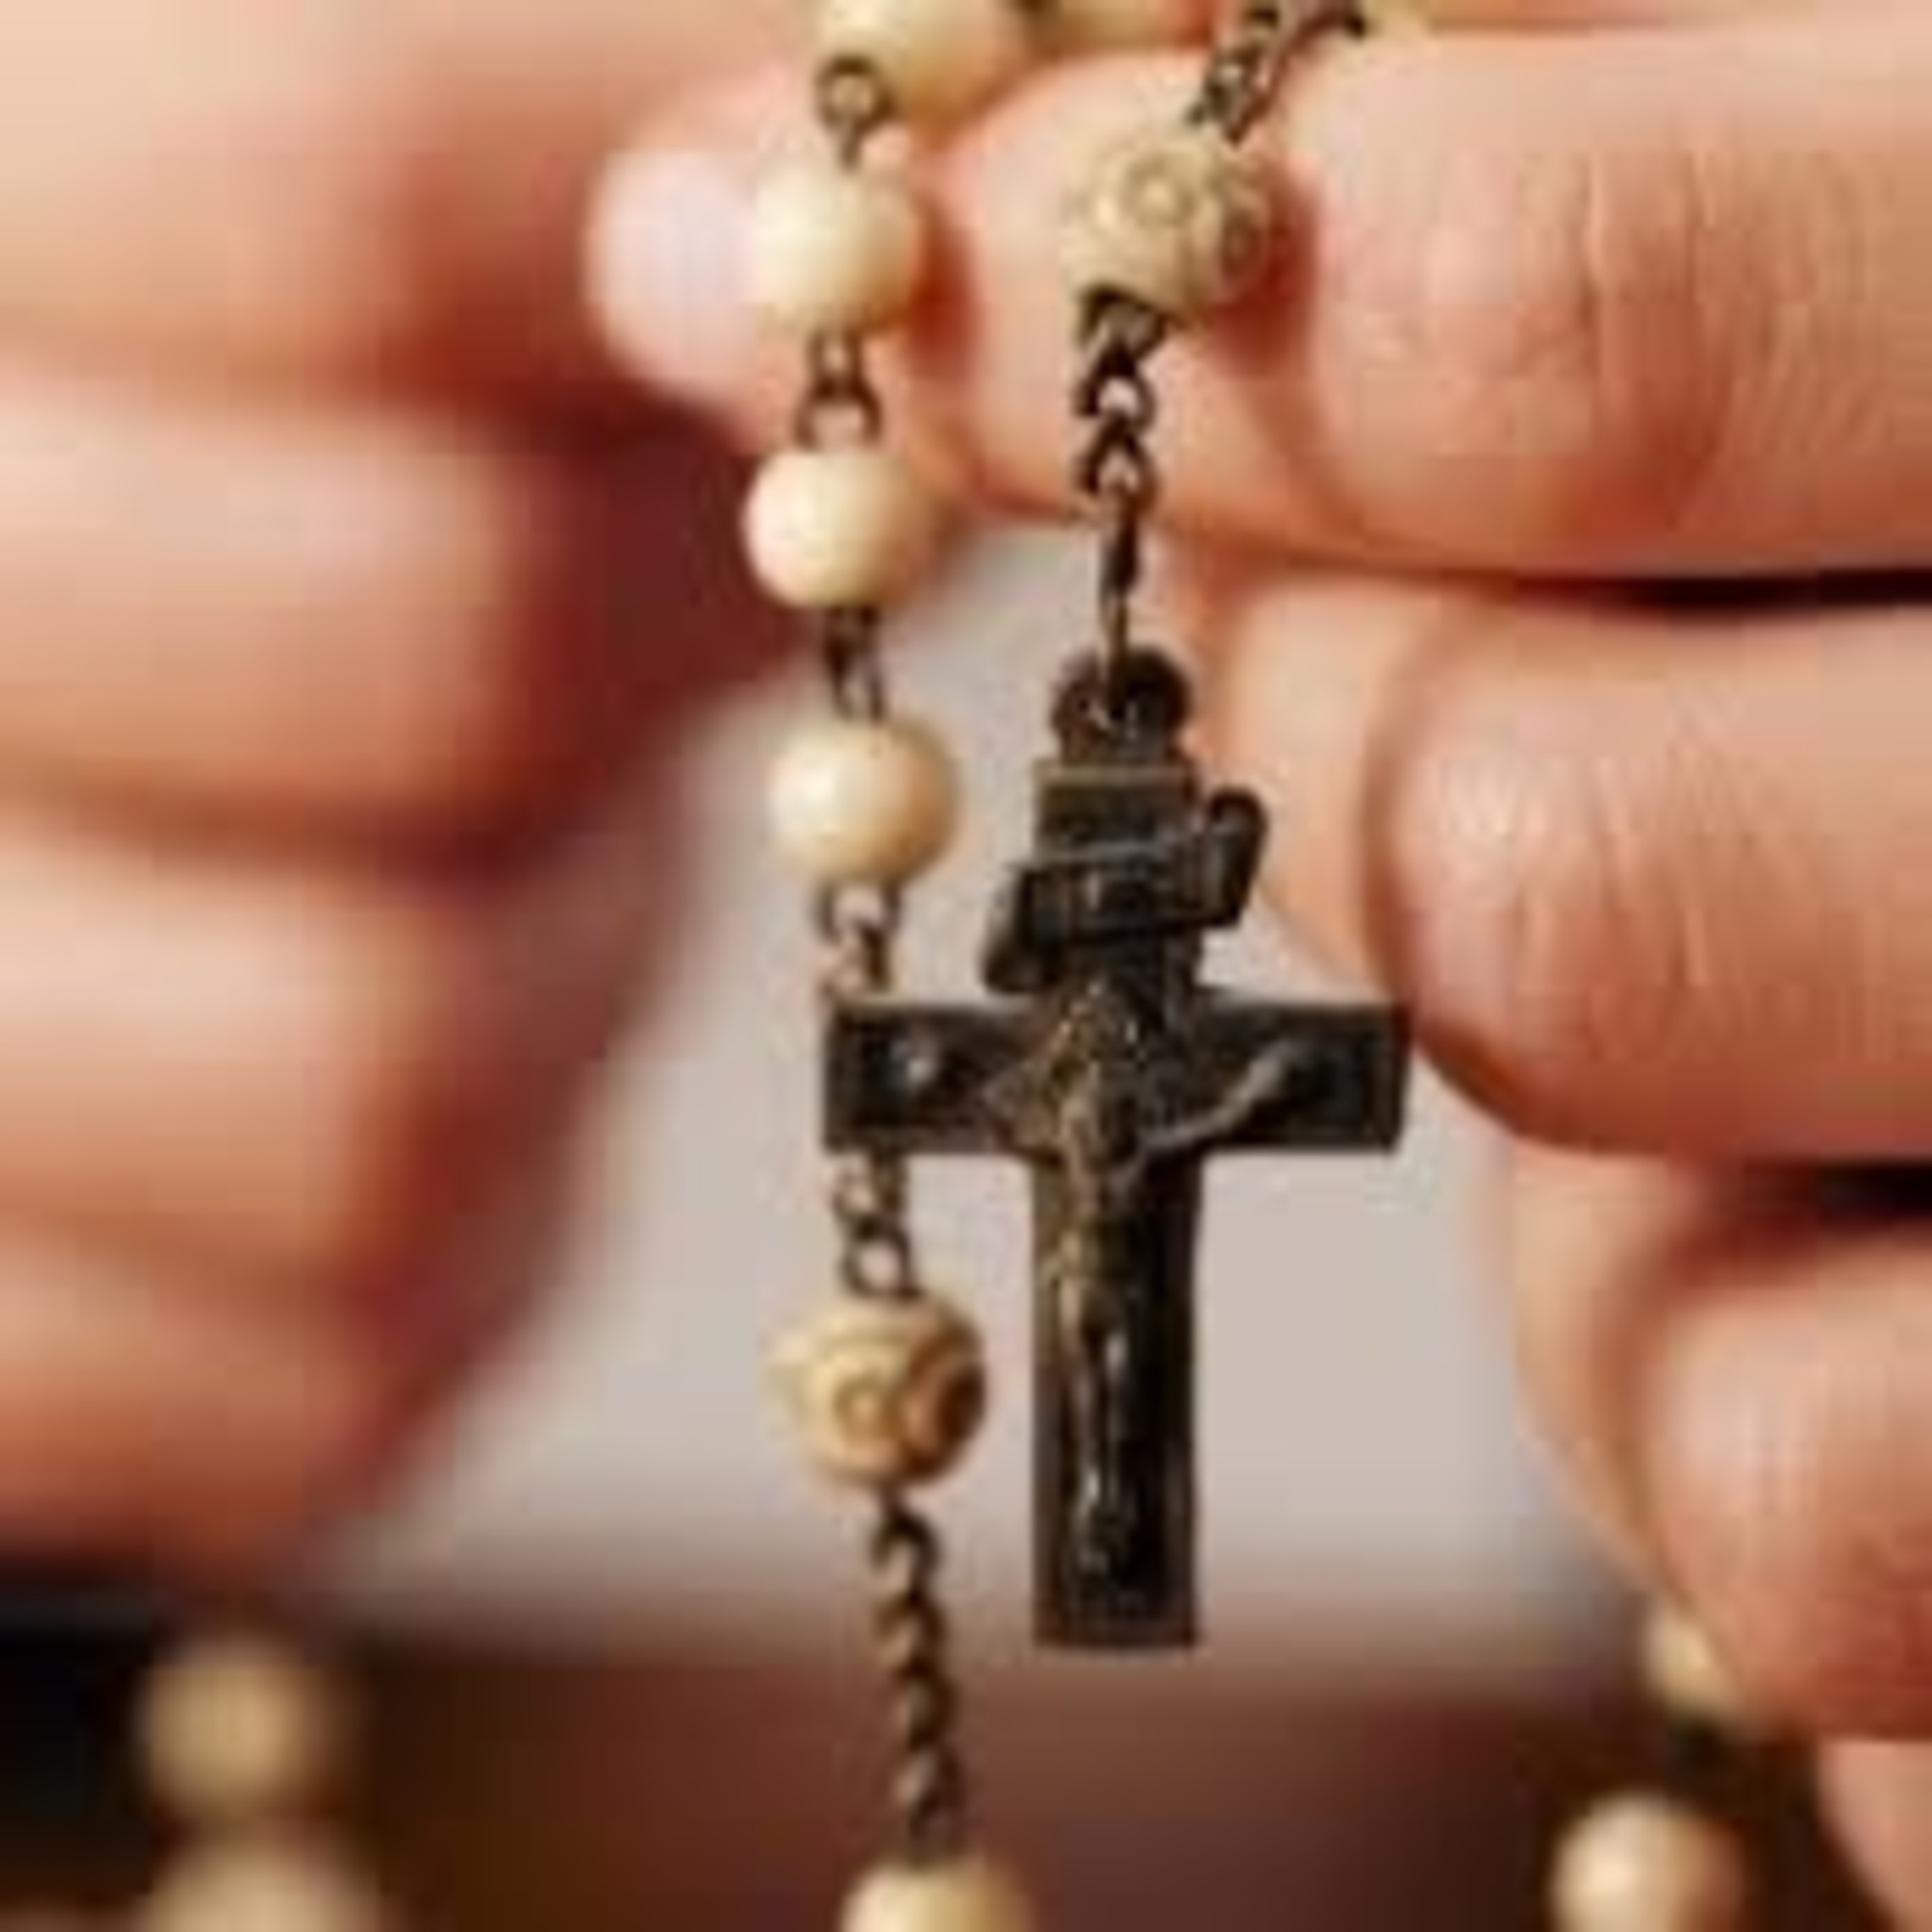 Prayer Rosary